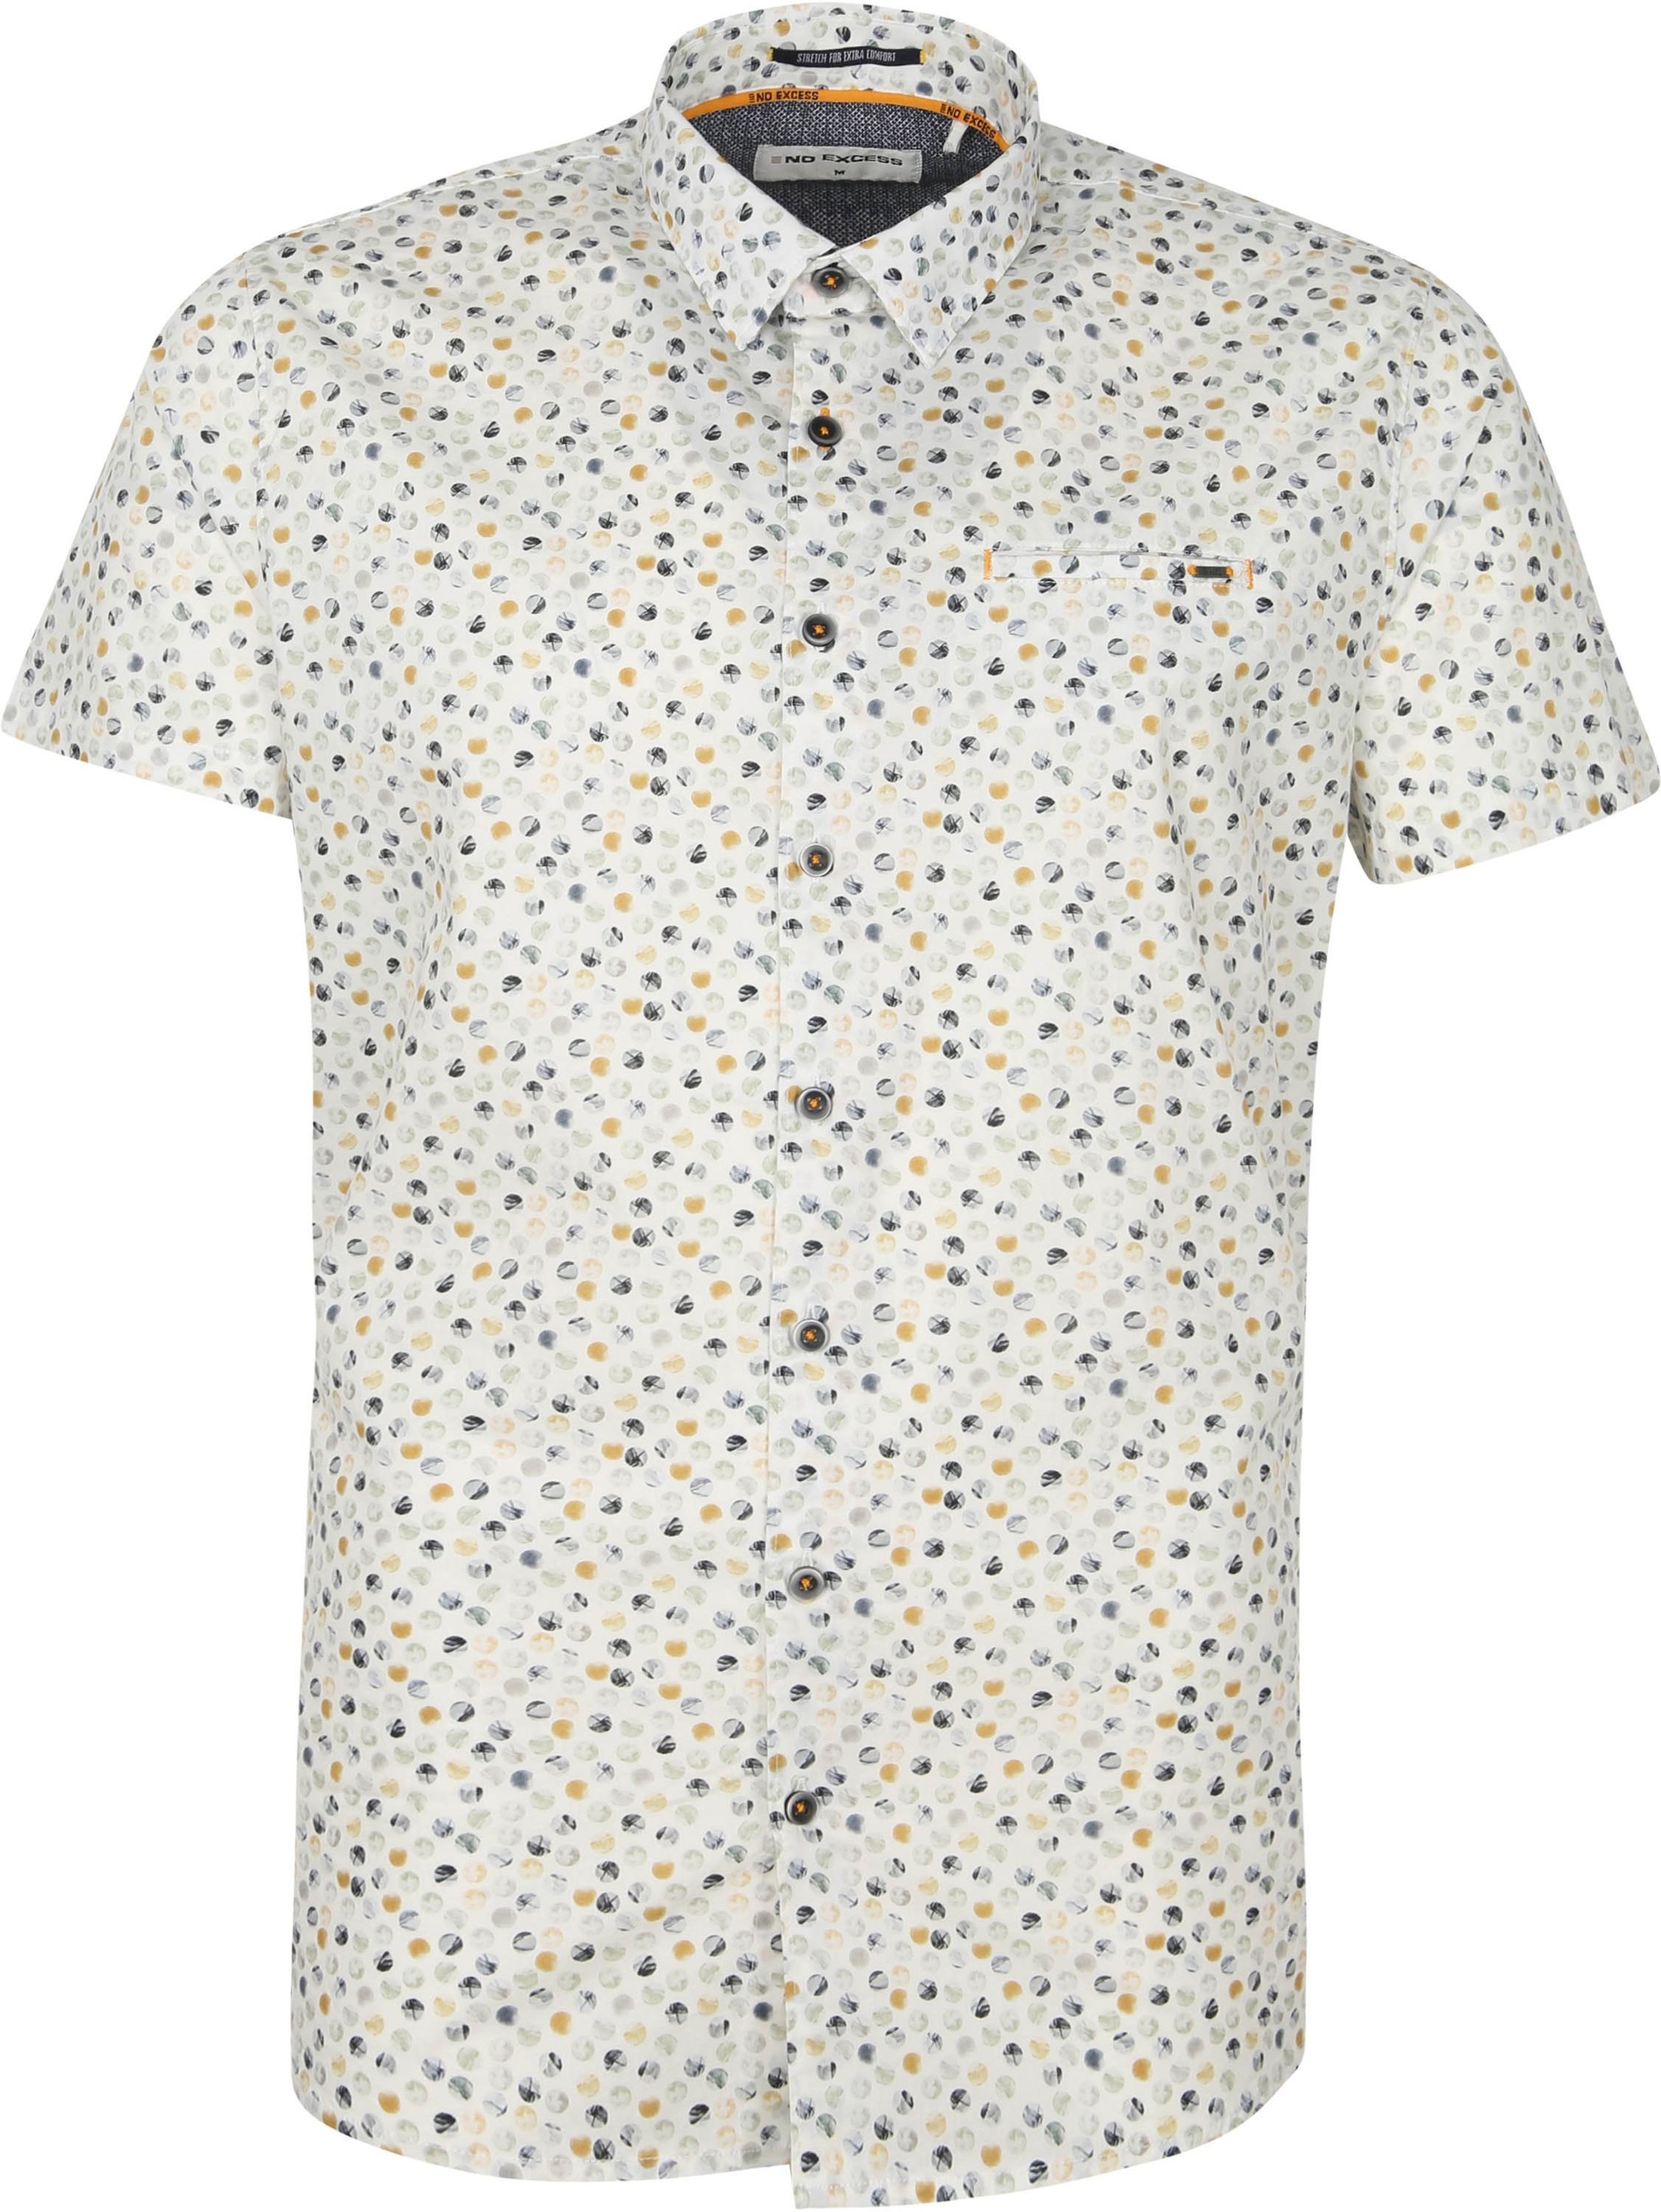 No-Excess Shirt Dots Sun Multicolour Yellow size L